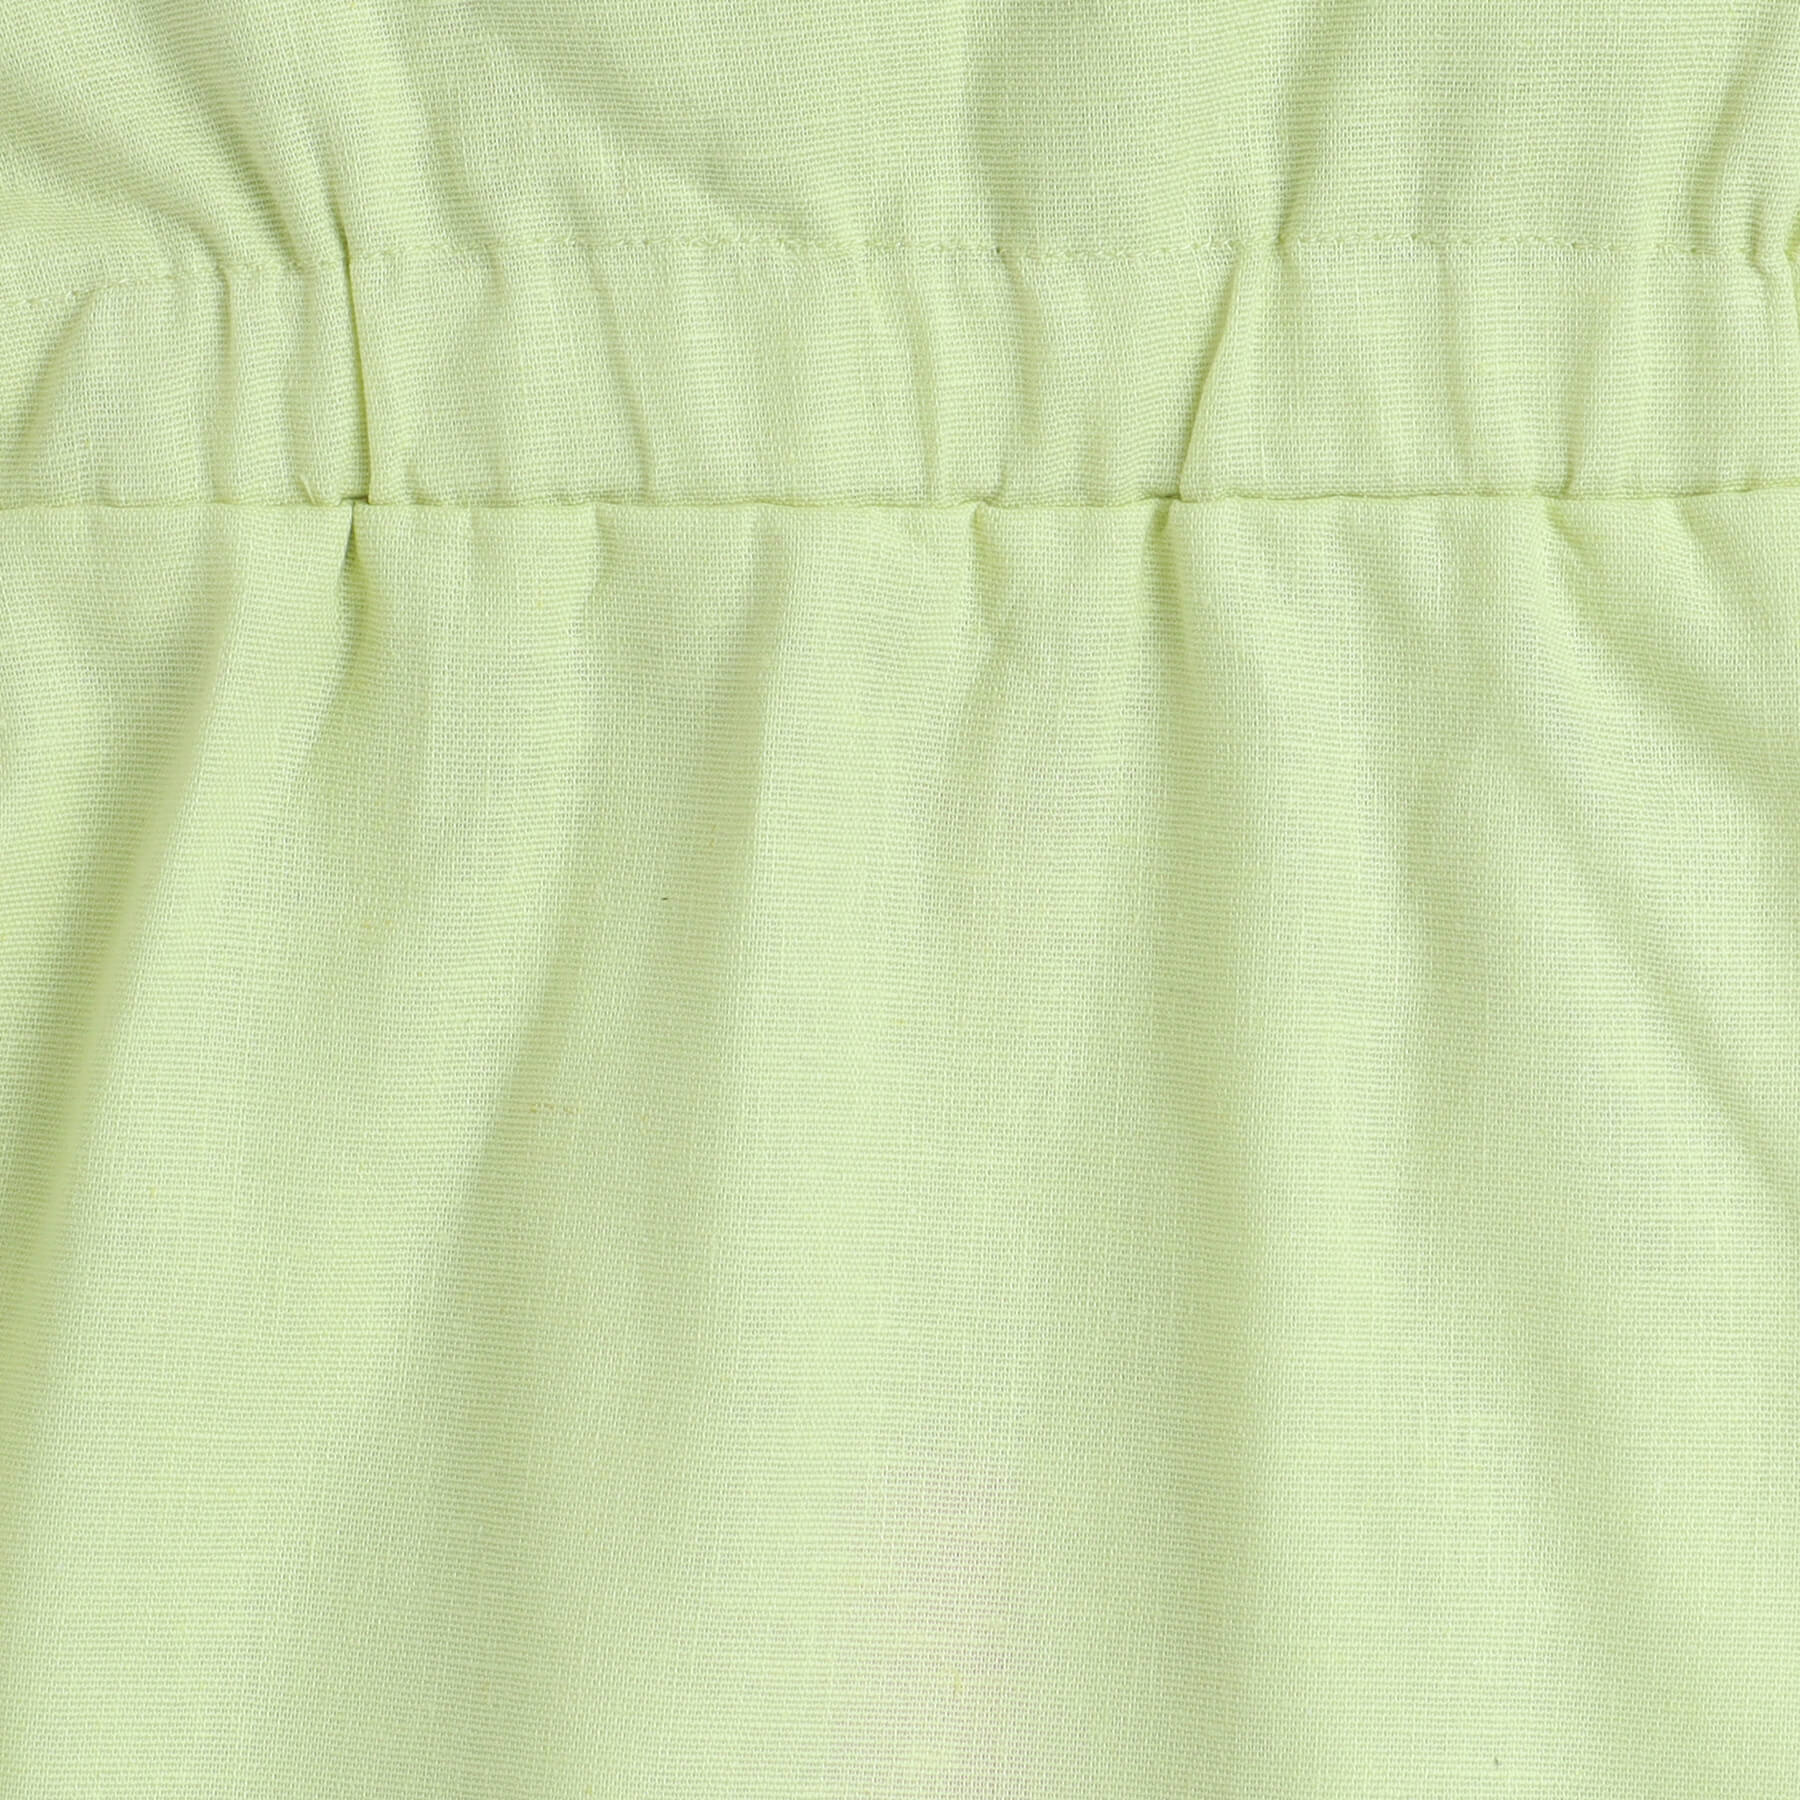 Shop Cut Out Detail Back Tie-Up Dress-Yellow Online